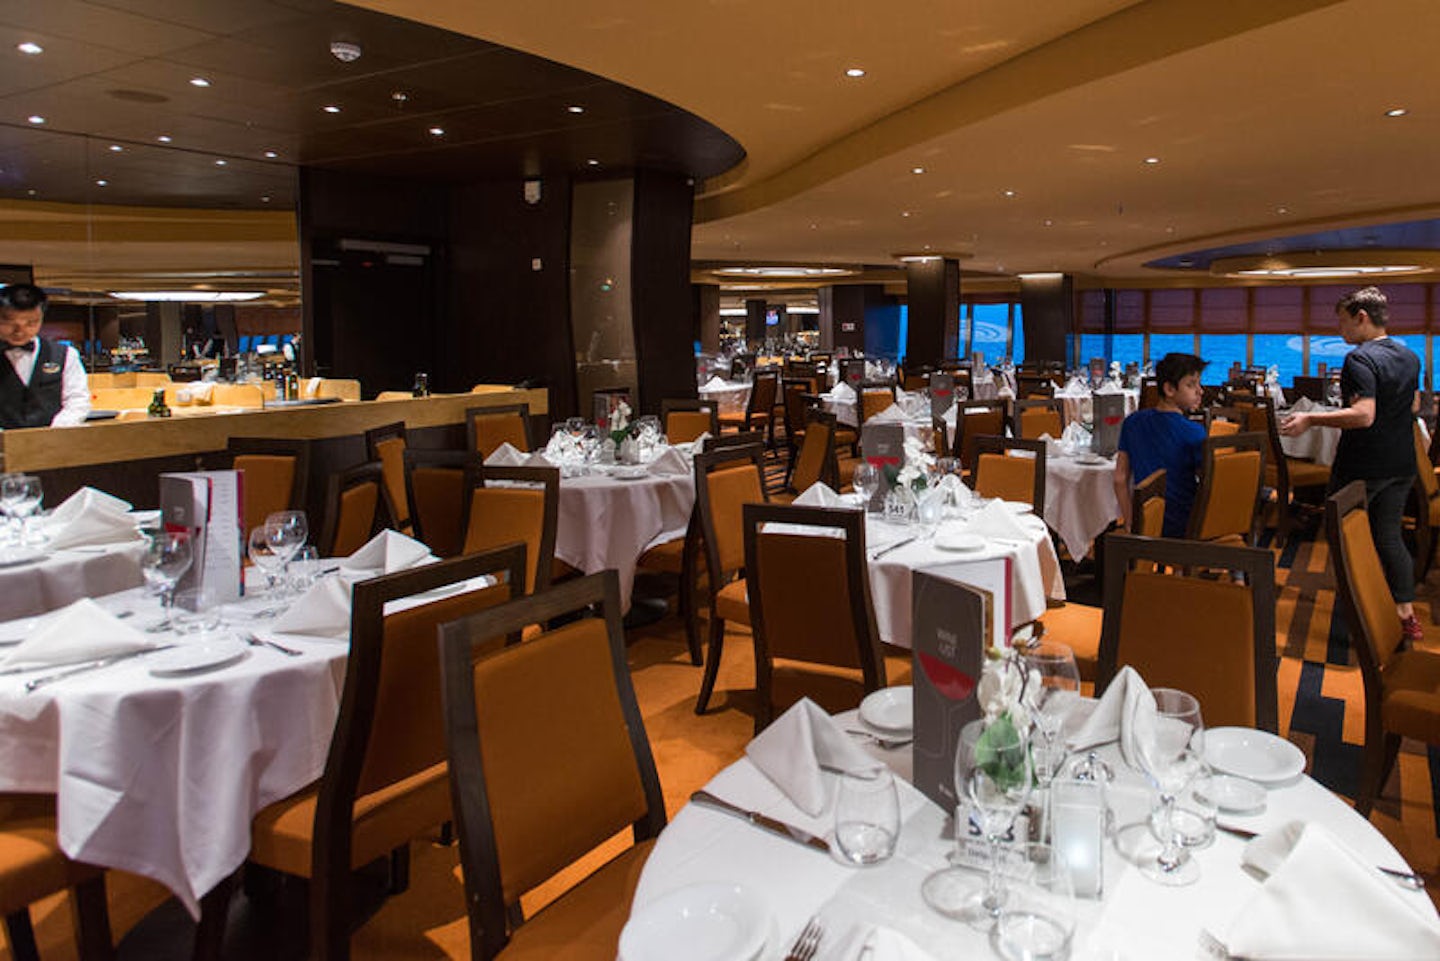 Panorama Restaurant on MSC Meraviglia